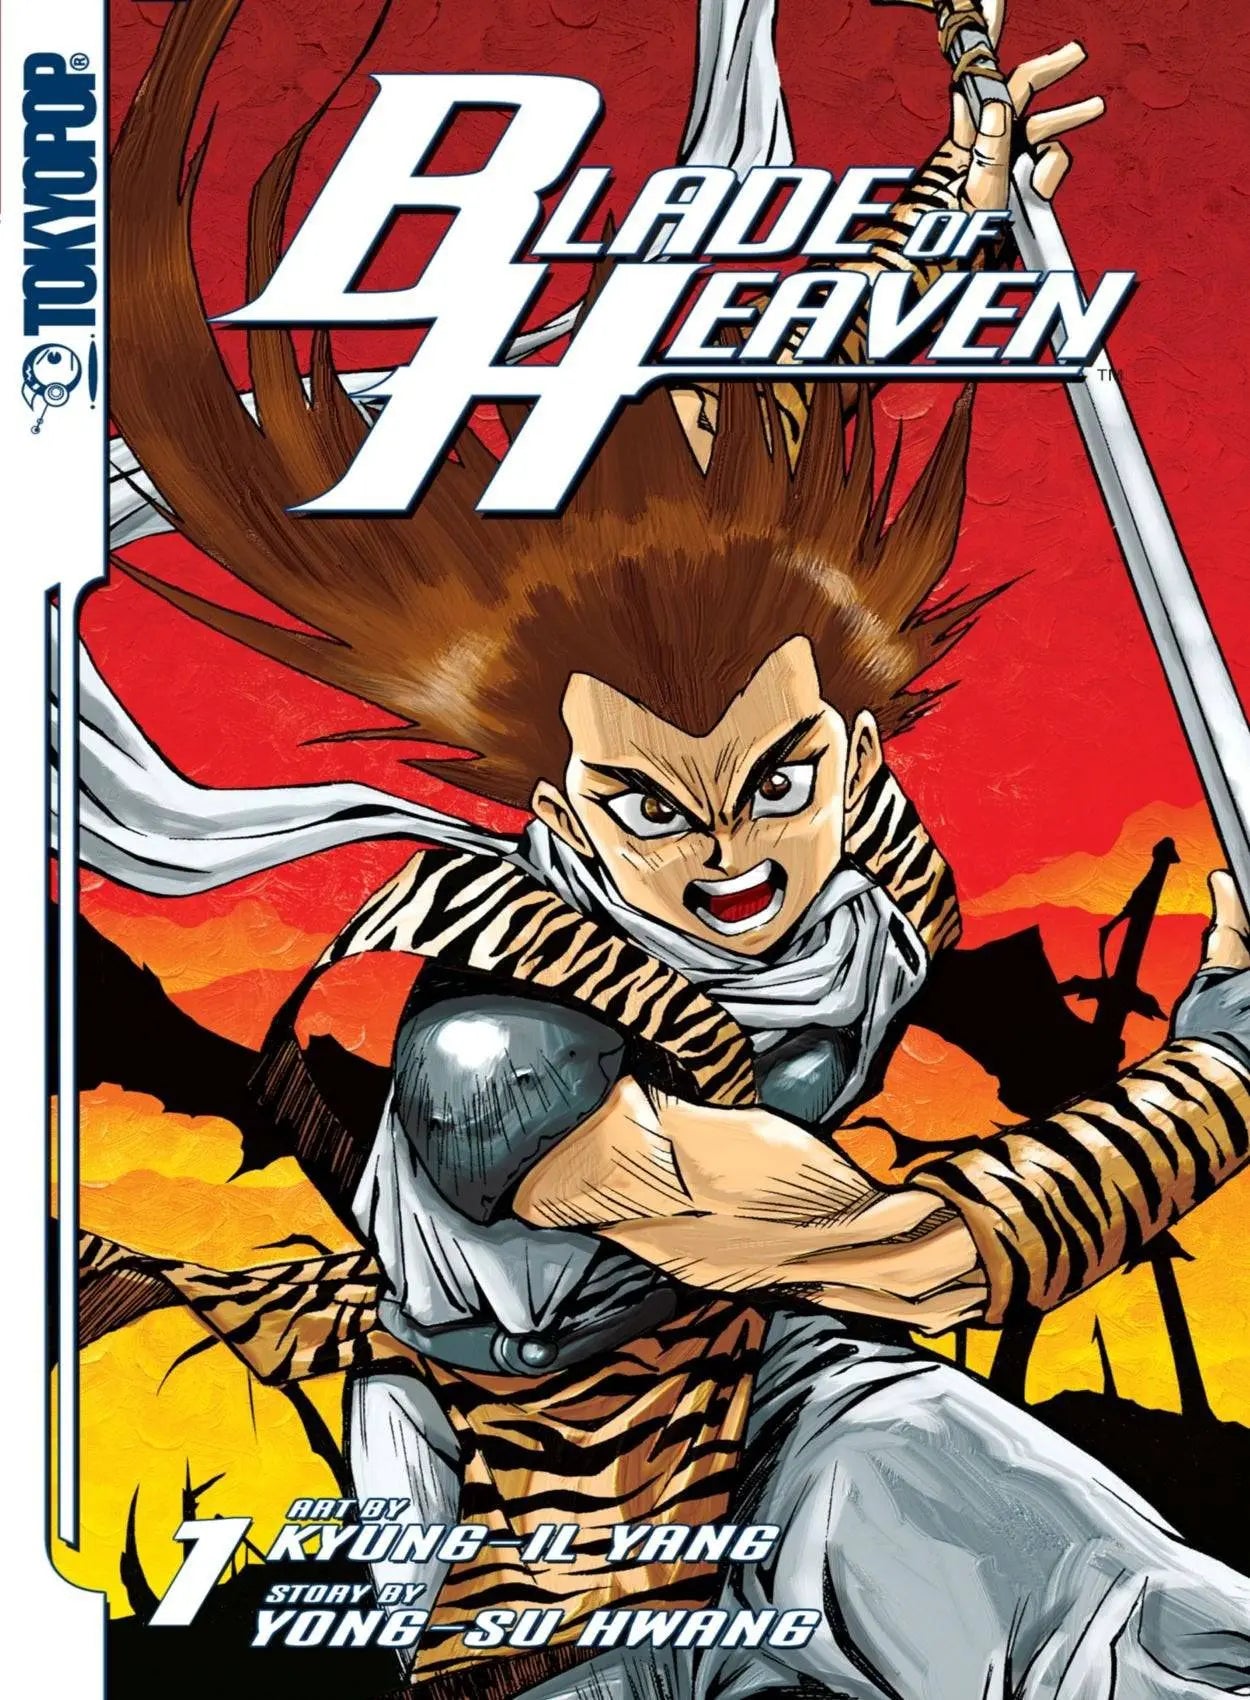 RARE: Blade of Heaven Volume 1 King Gaming